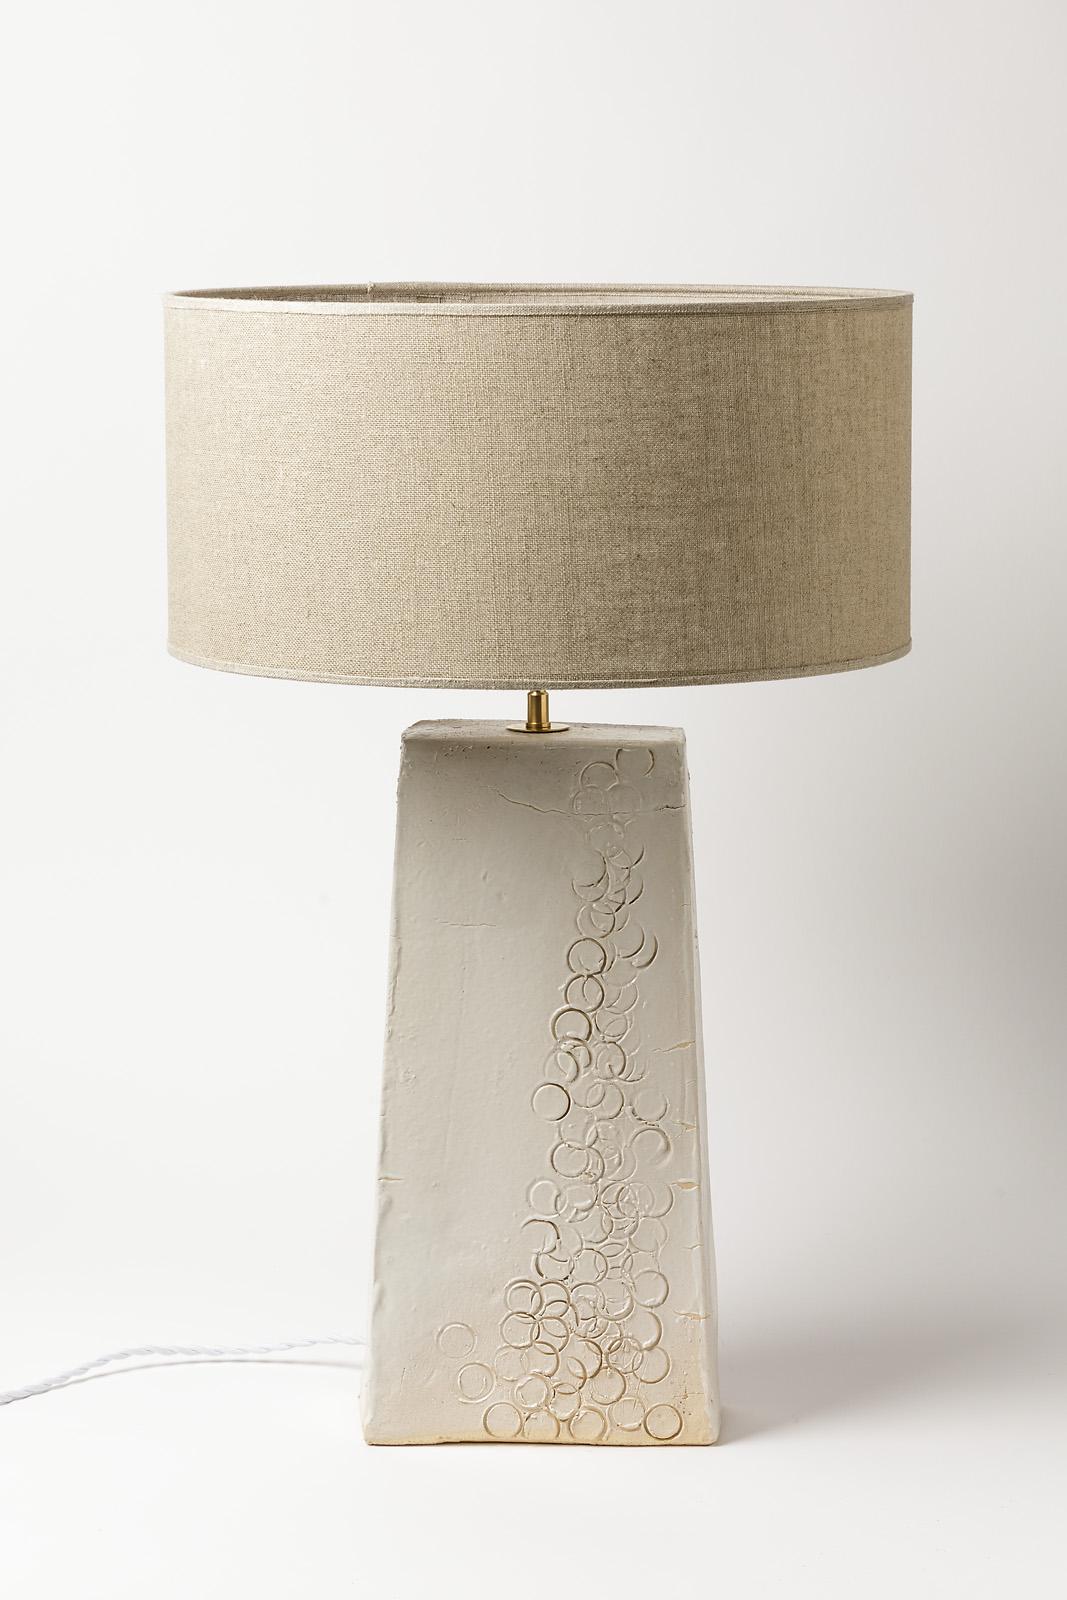 White Stoneware Ceramic Table Lamp 20th Century Design Lighting handmade For Sale 2